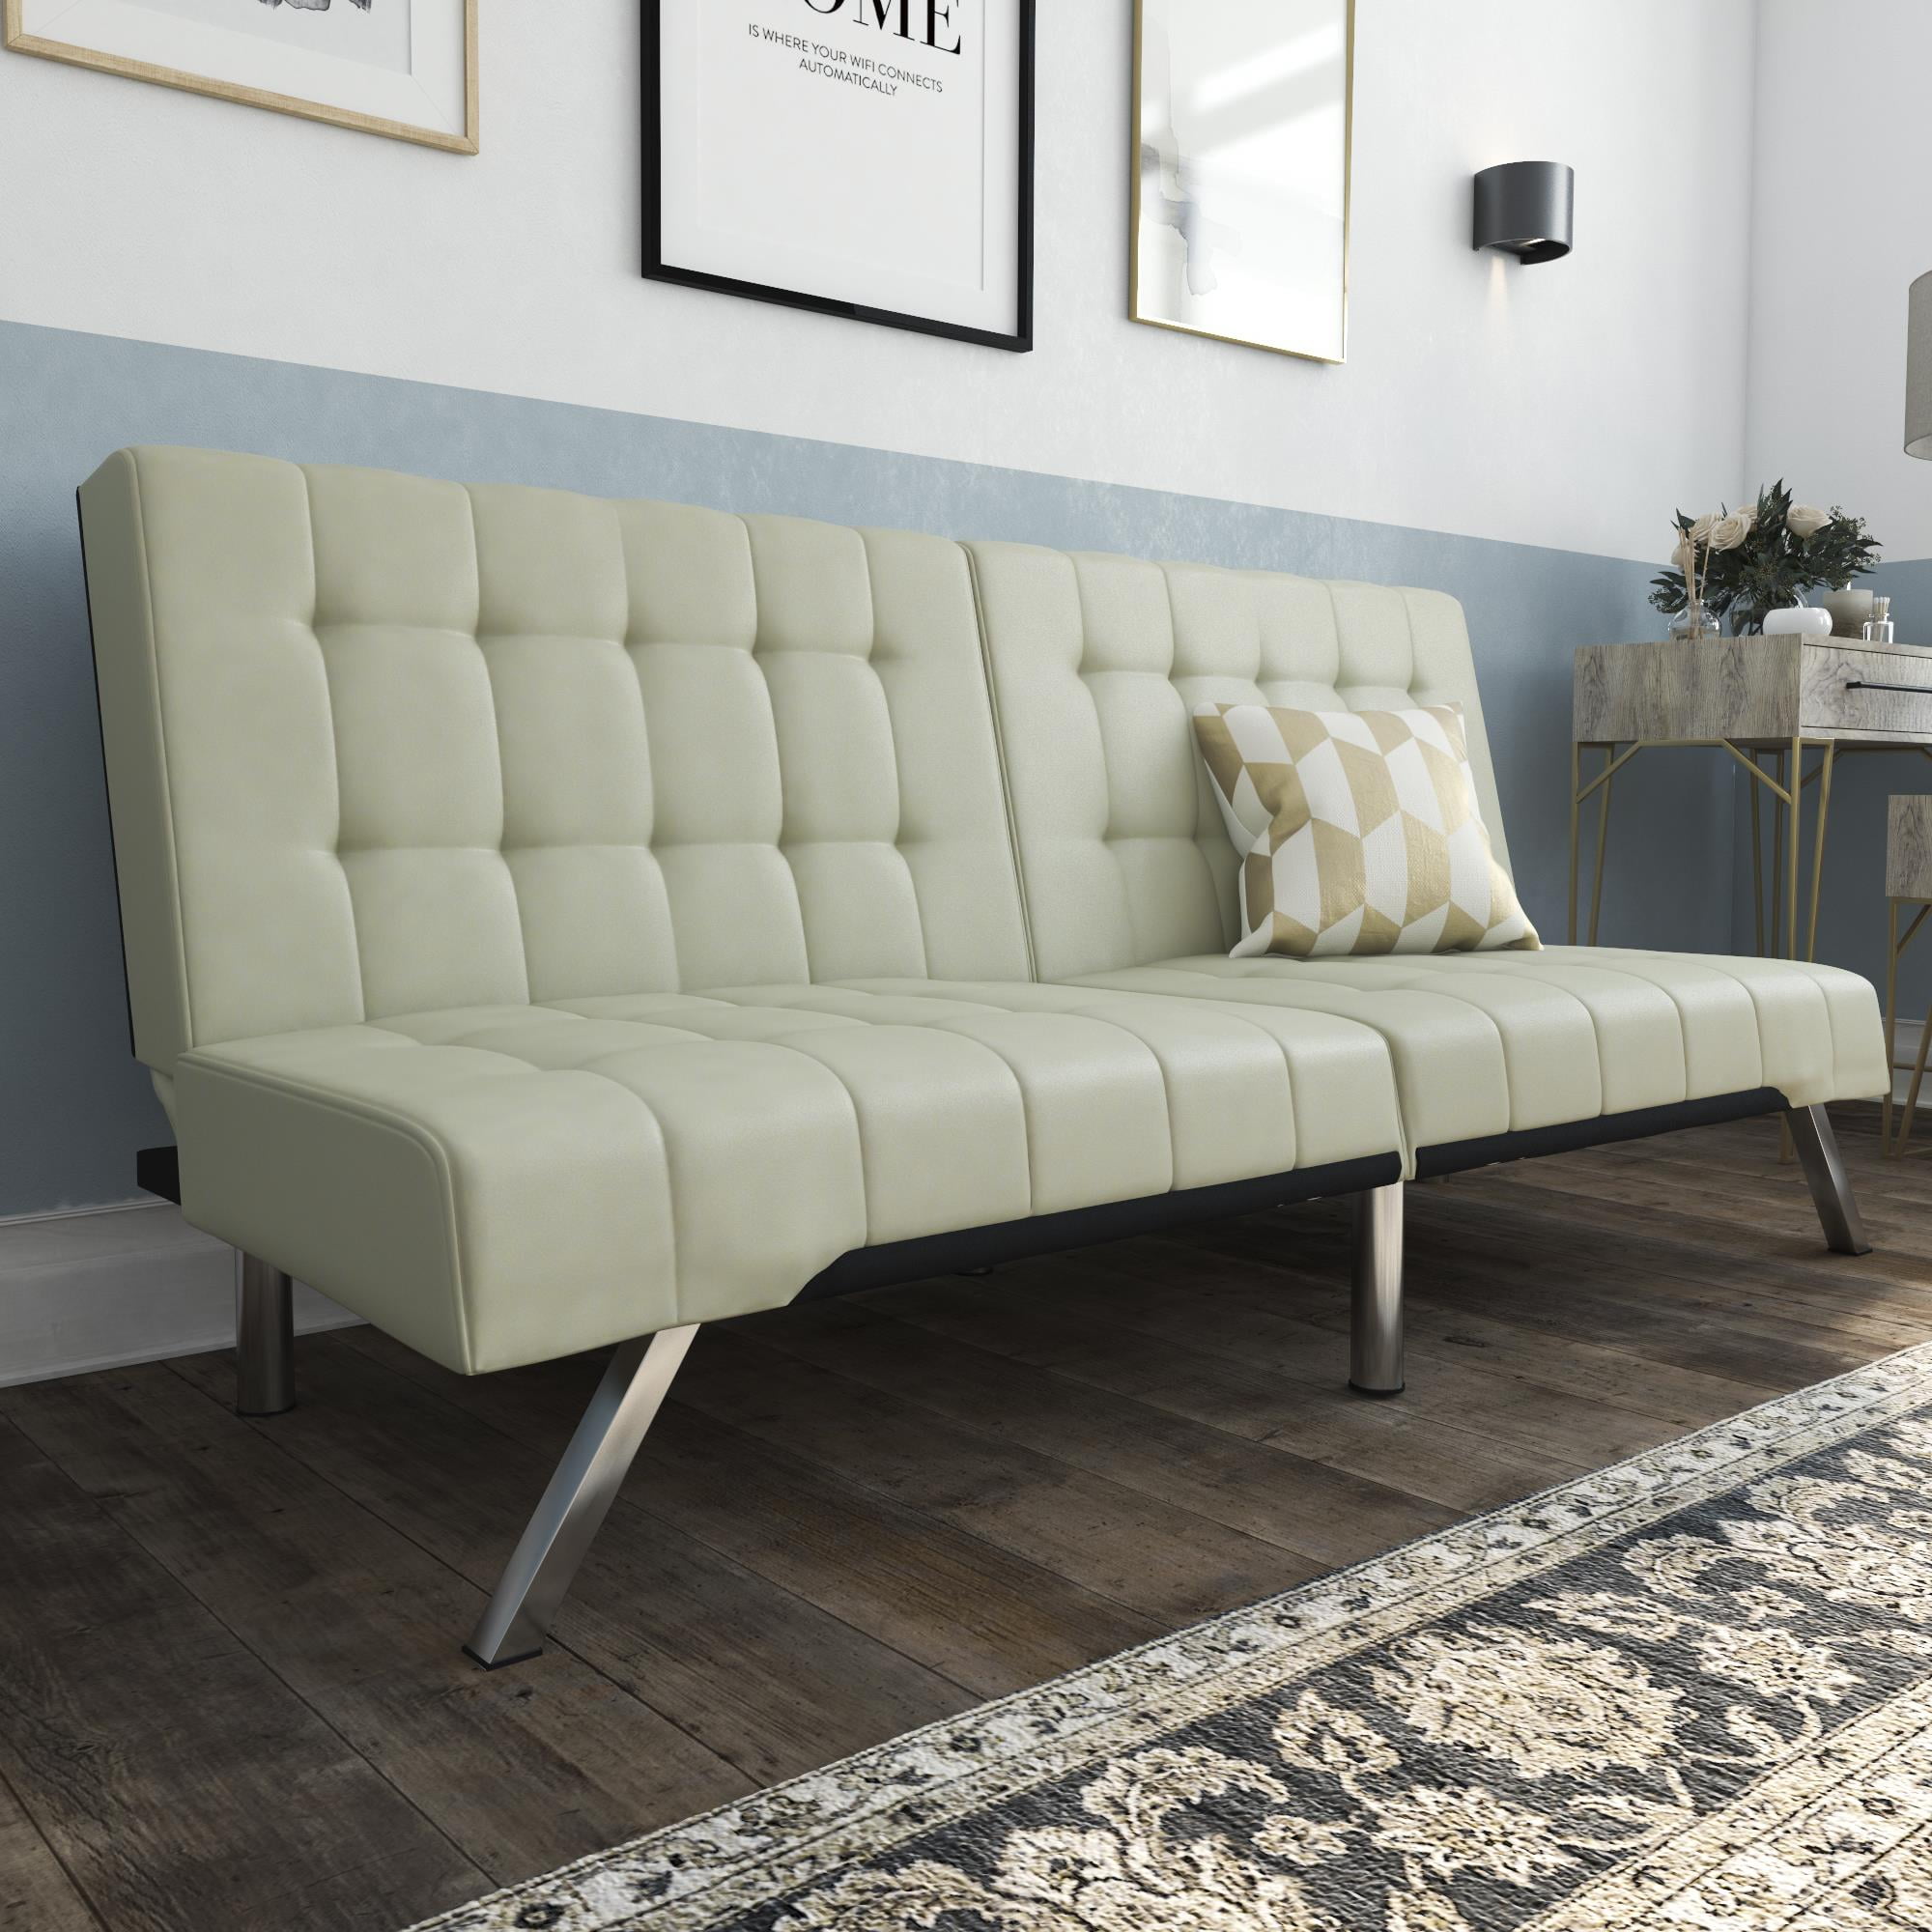 Dhp Emily Convertible Tufted Futon Sofa, Dhp Emily Convertible Futon Sofa Couch Vanilla Faux Leather